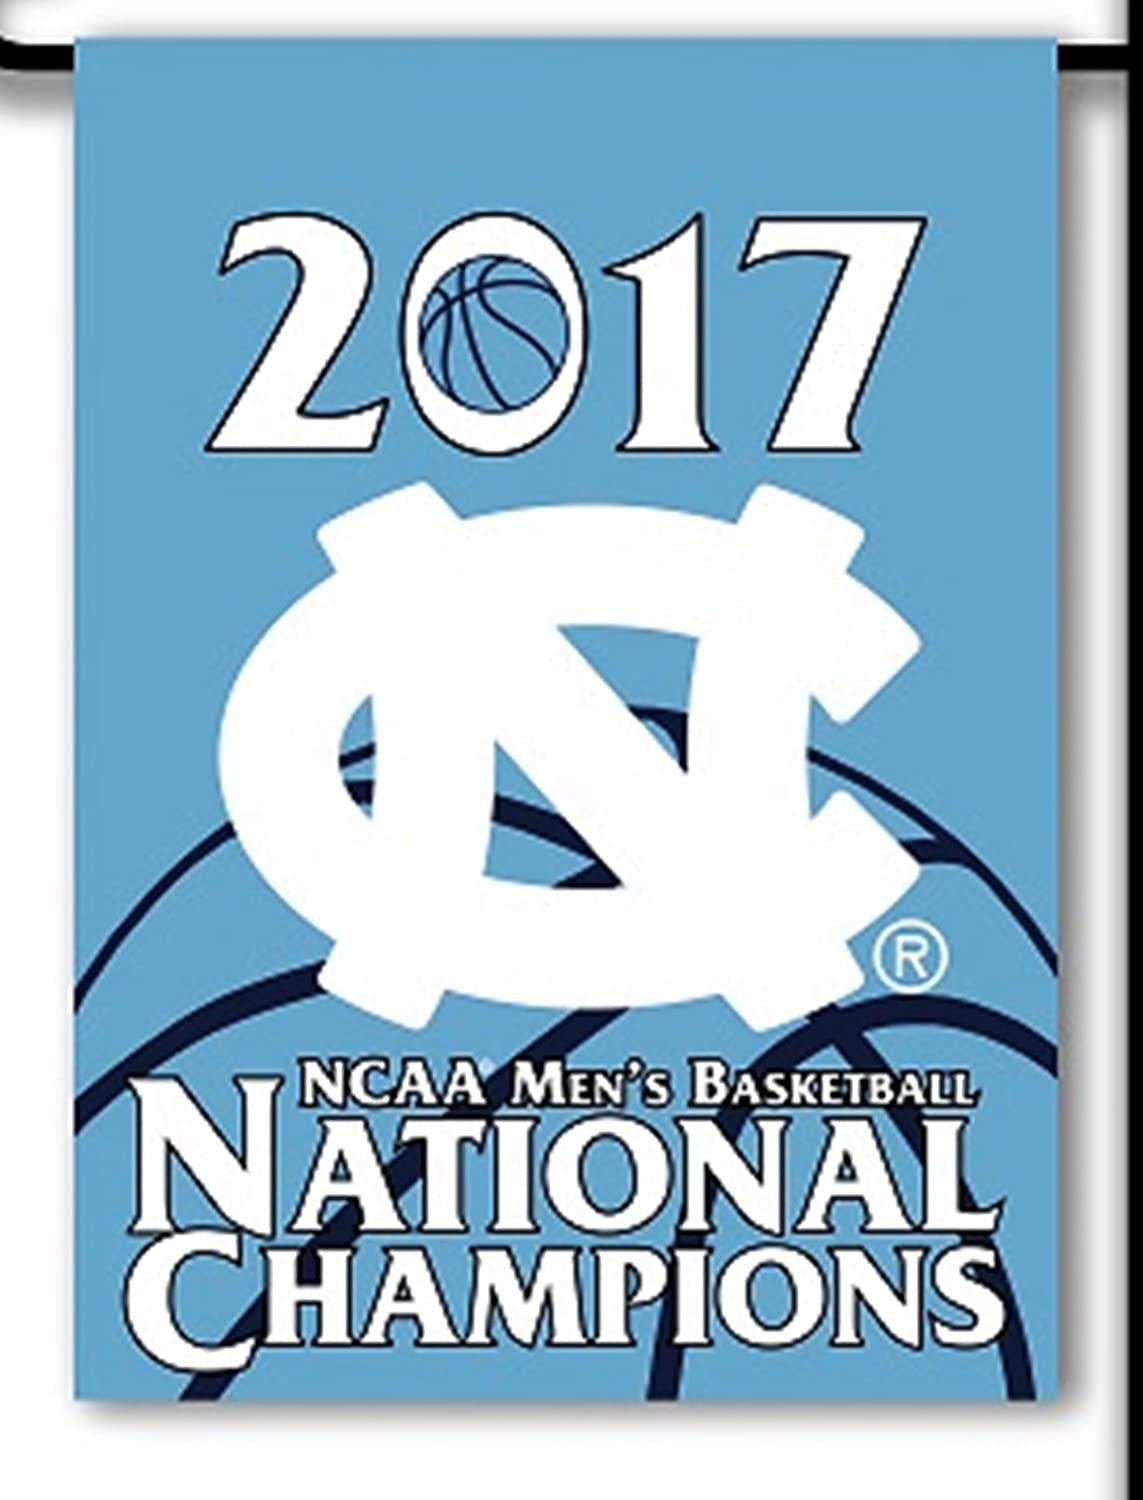 University of North Carolina Tar Heels 2017 Champions Premium Garden Flag Banner, Double Sided, 13x18 Inch